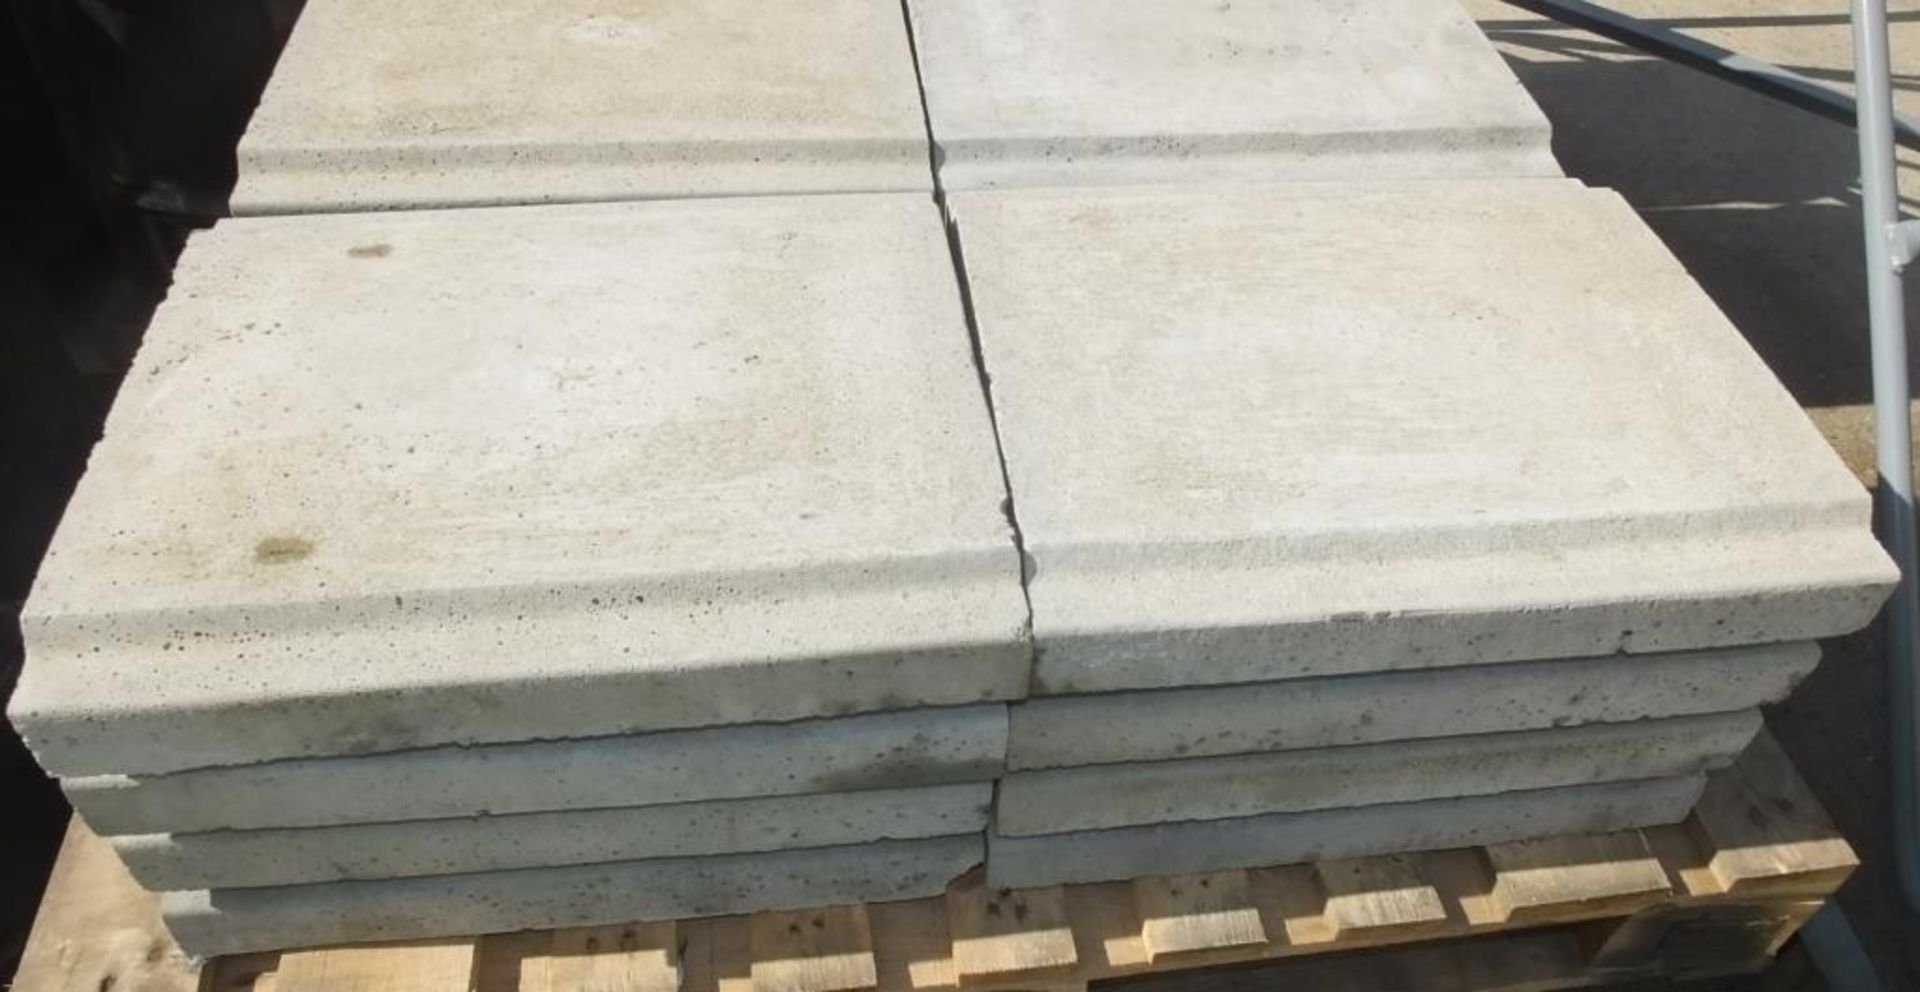 32x Concrete Drainage Slabs L 500mm x W 440mm x H 70mm - Image 2 of 2